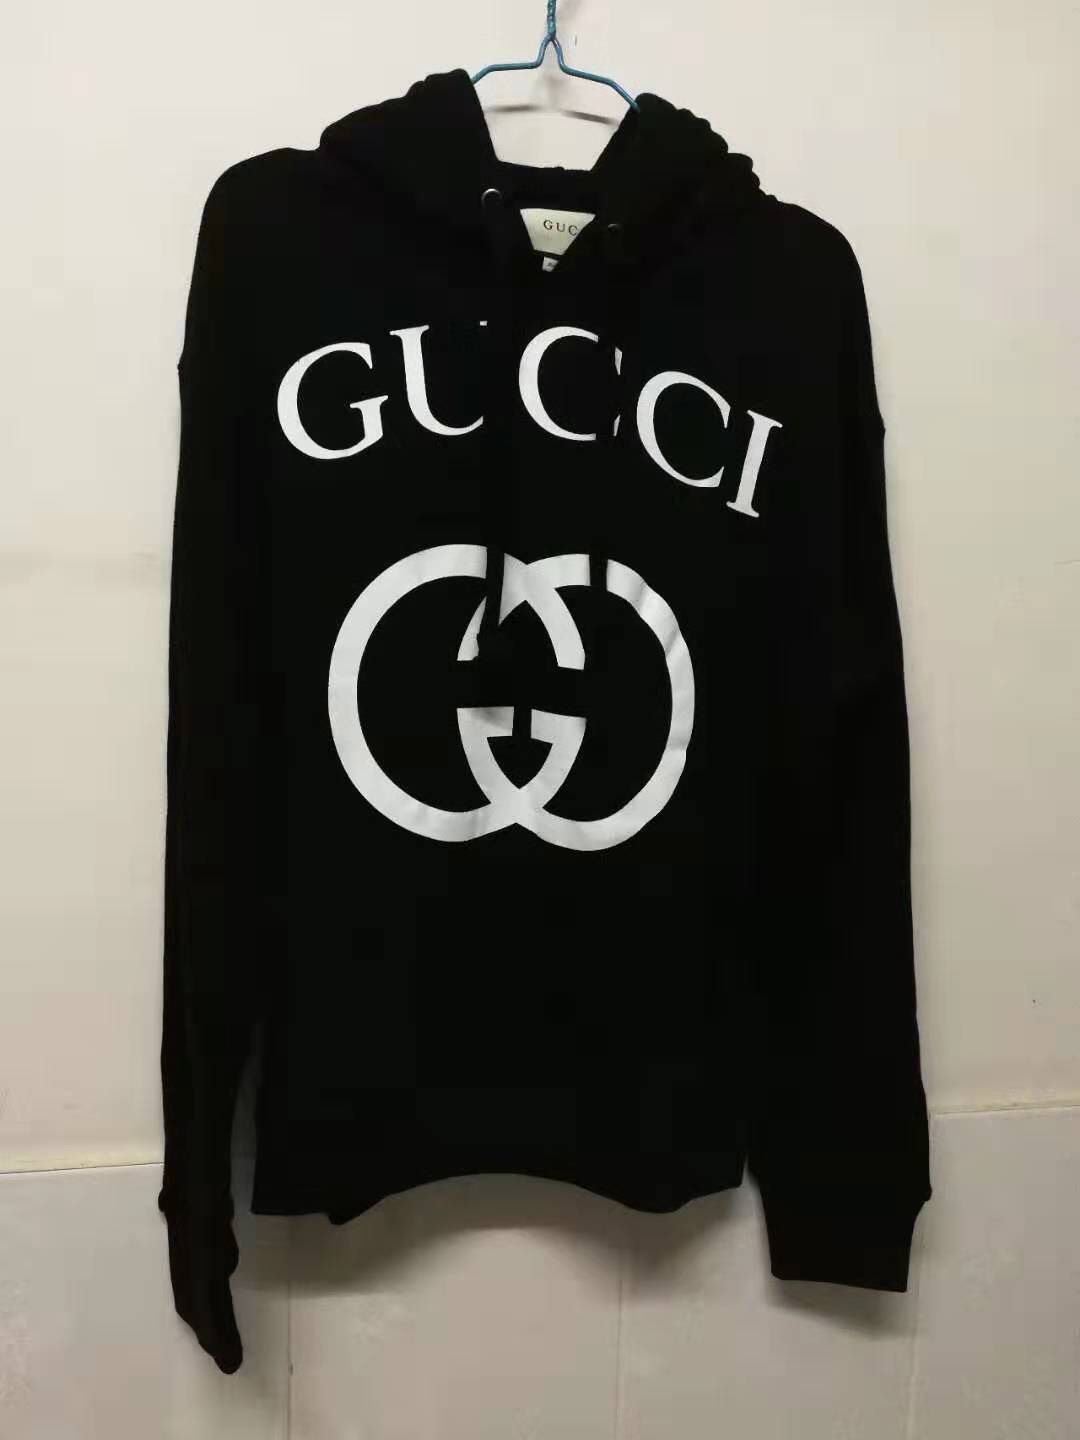 Gucci black men’s Sweat shirt $250 med men